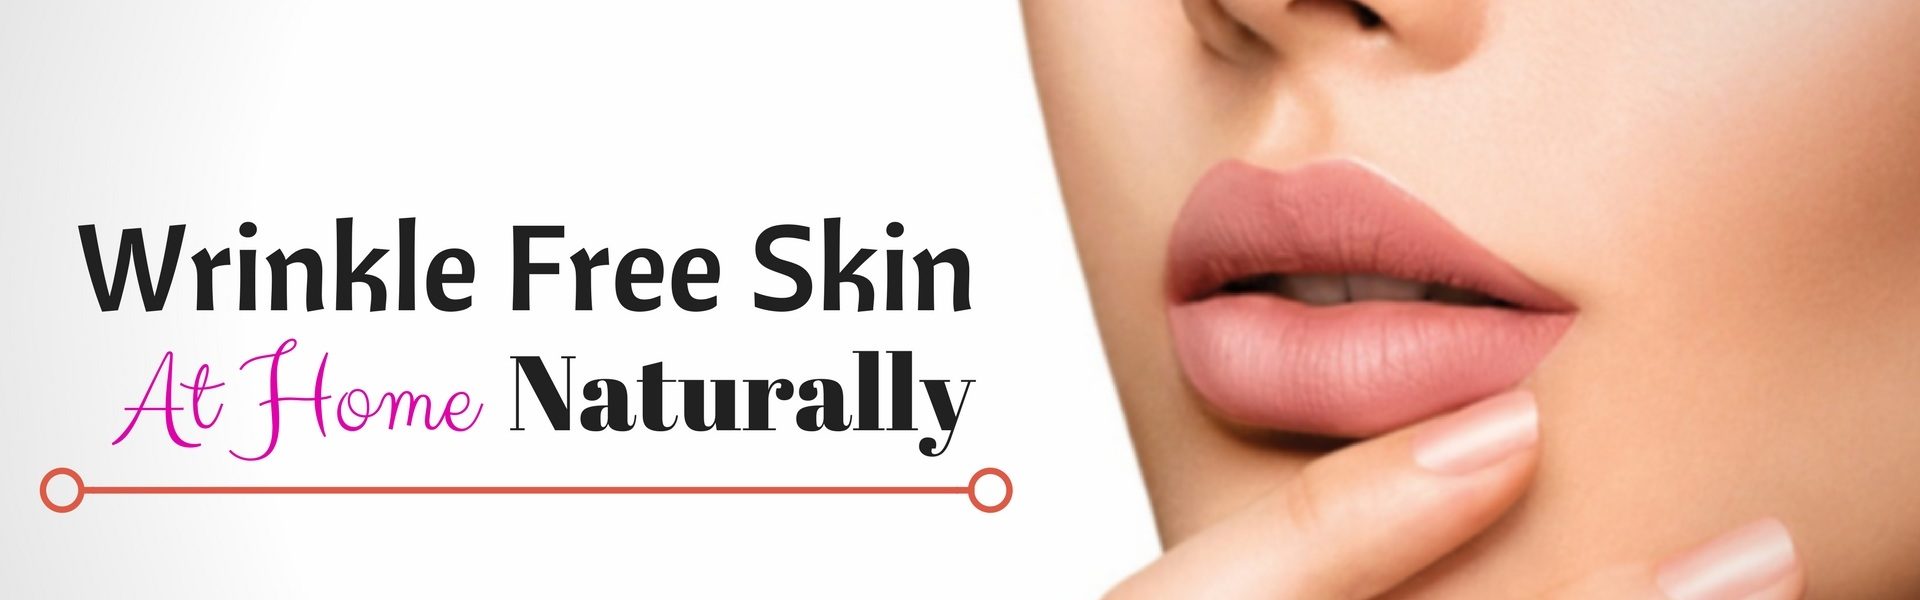 Wrinkle Free Skin Naturally